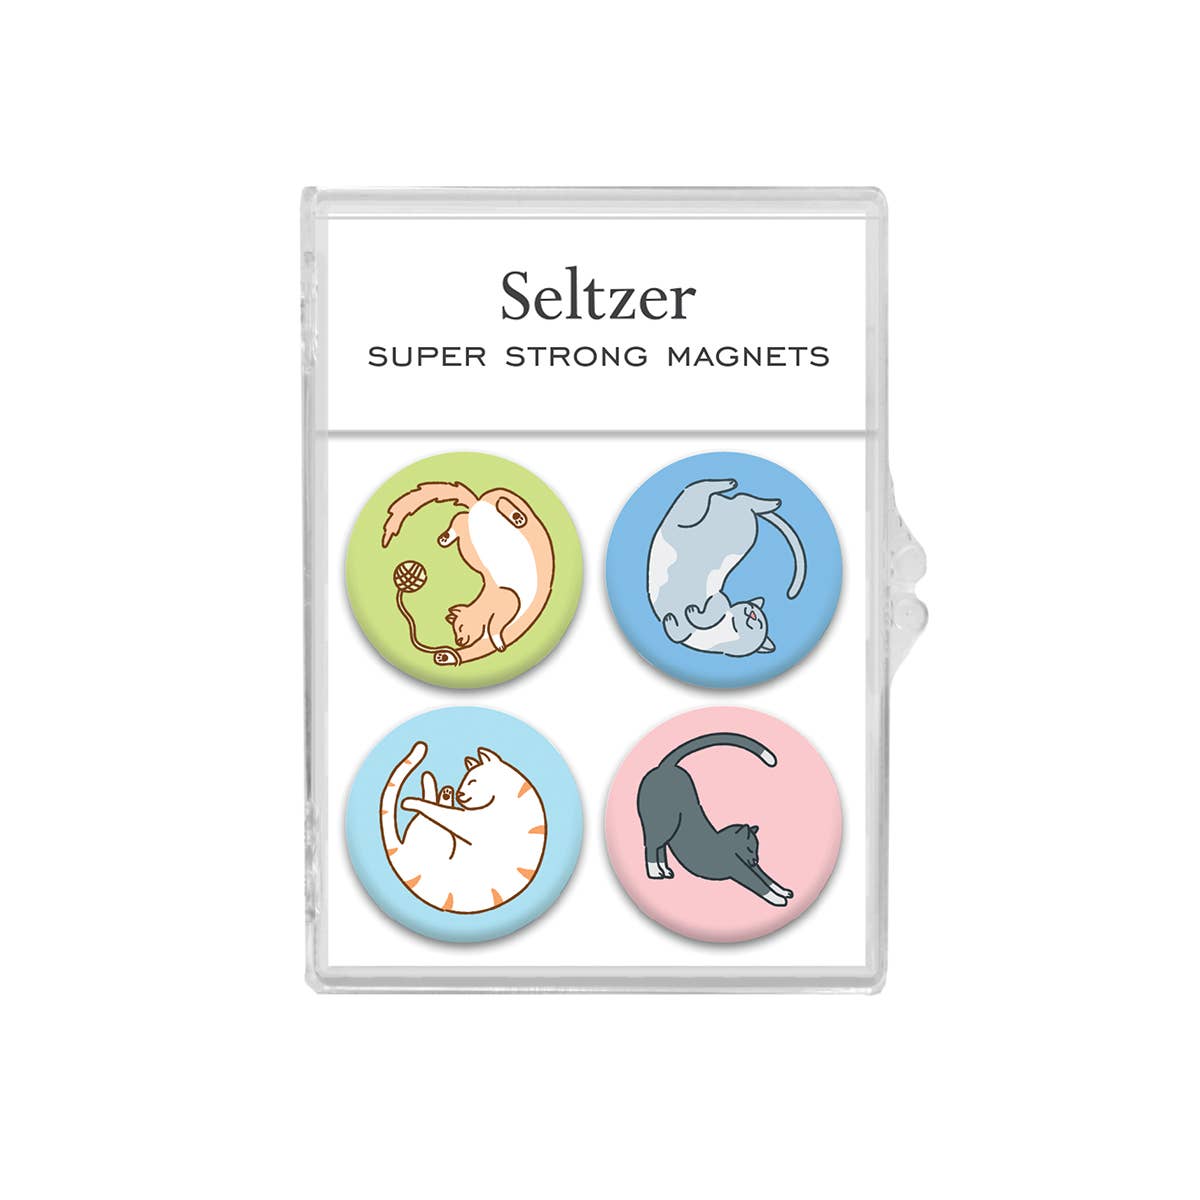 Seltzer Goods - Curled Cat Magnet Set